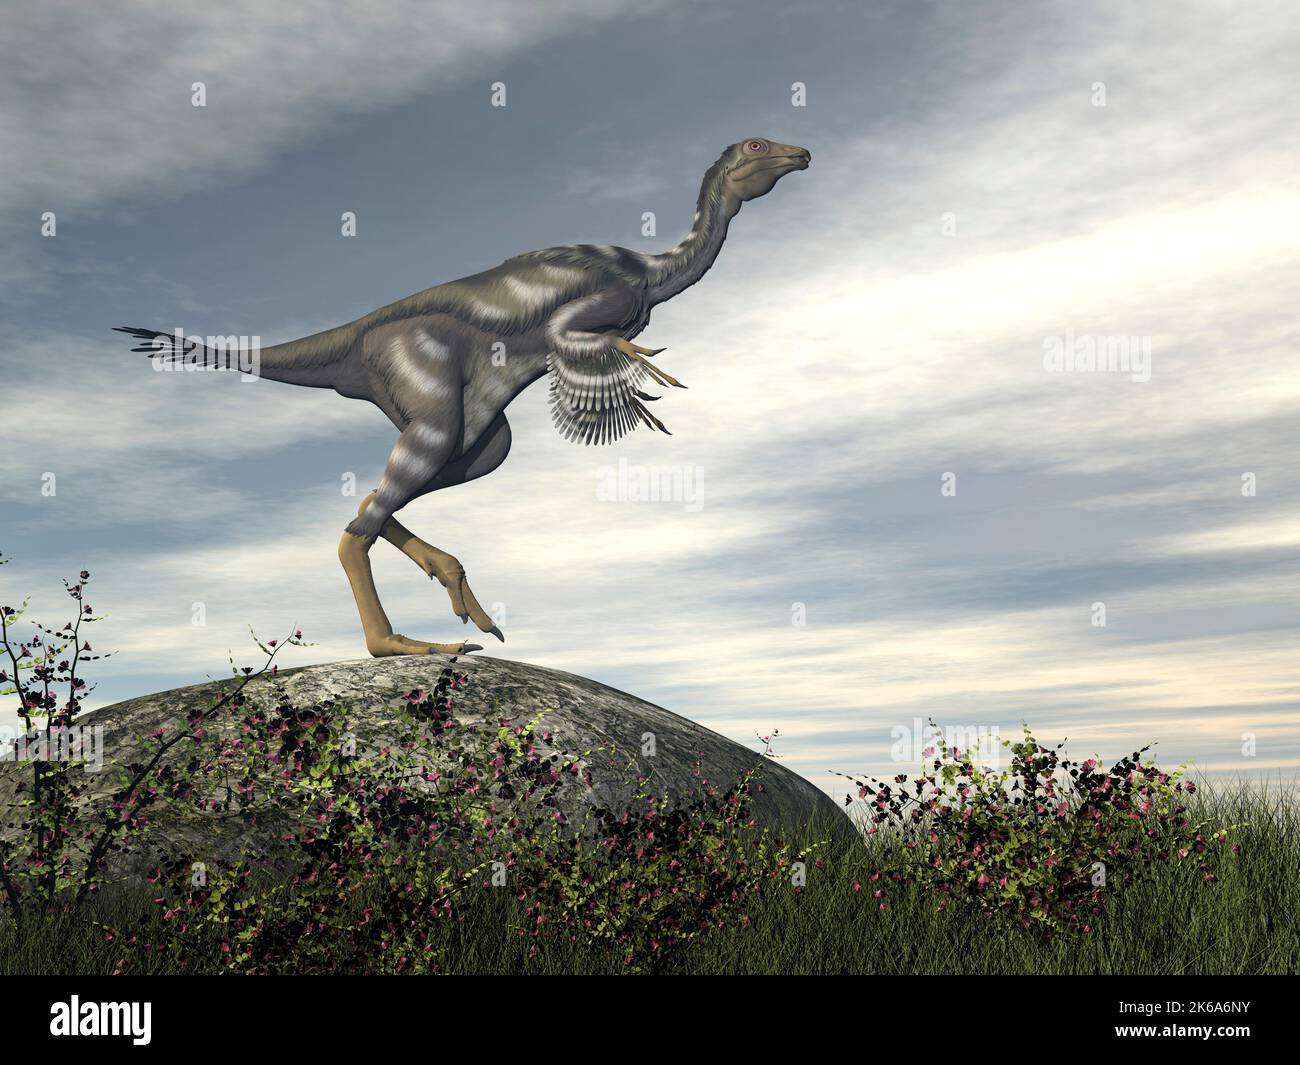 Caudipteryx dinosaur standing on top of a rock. Stock Photo